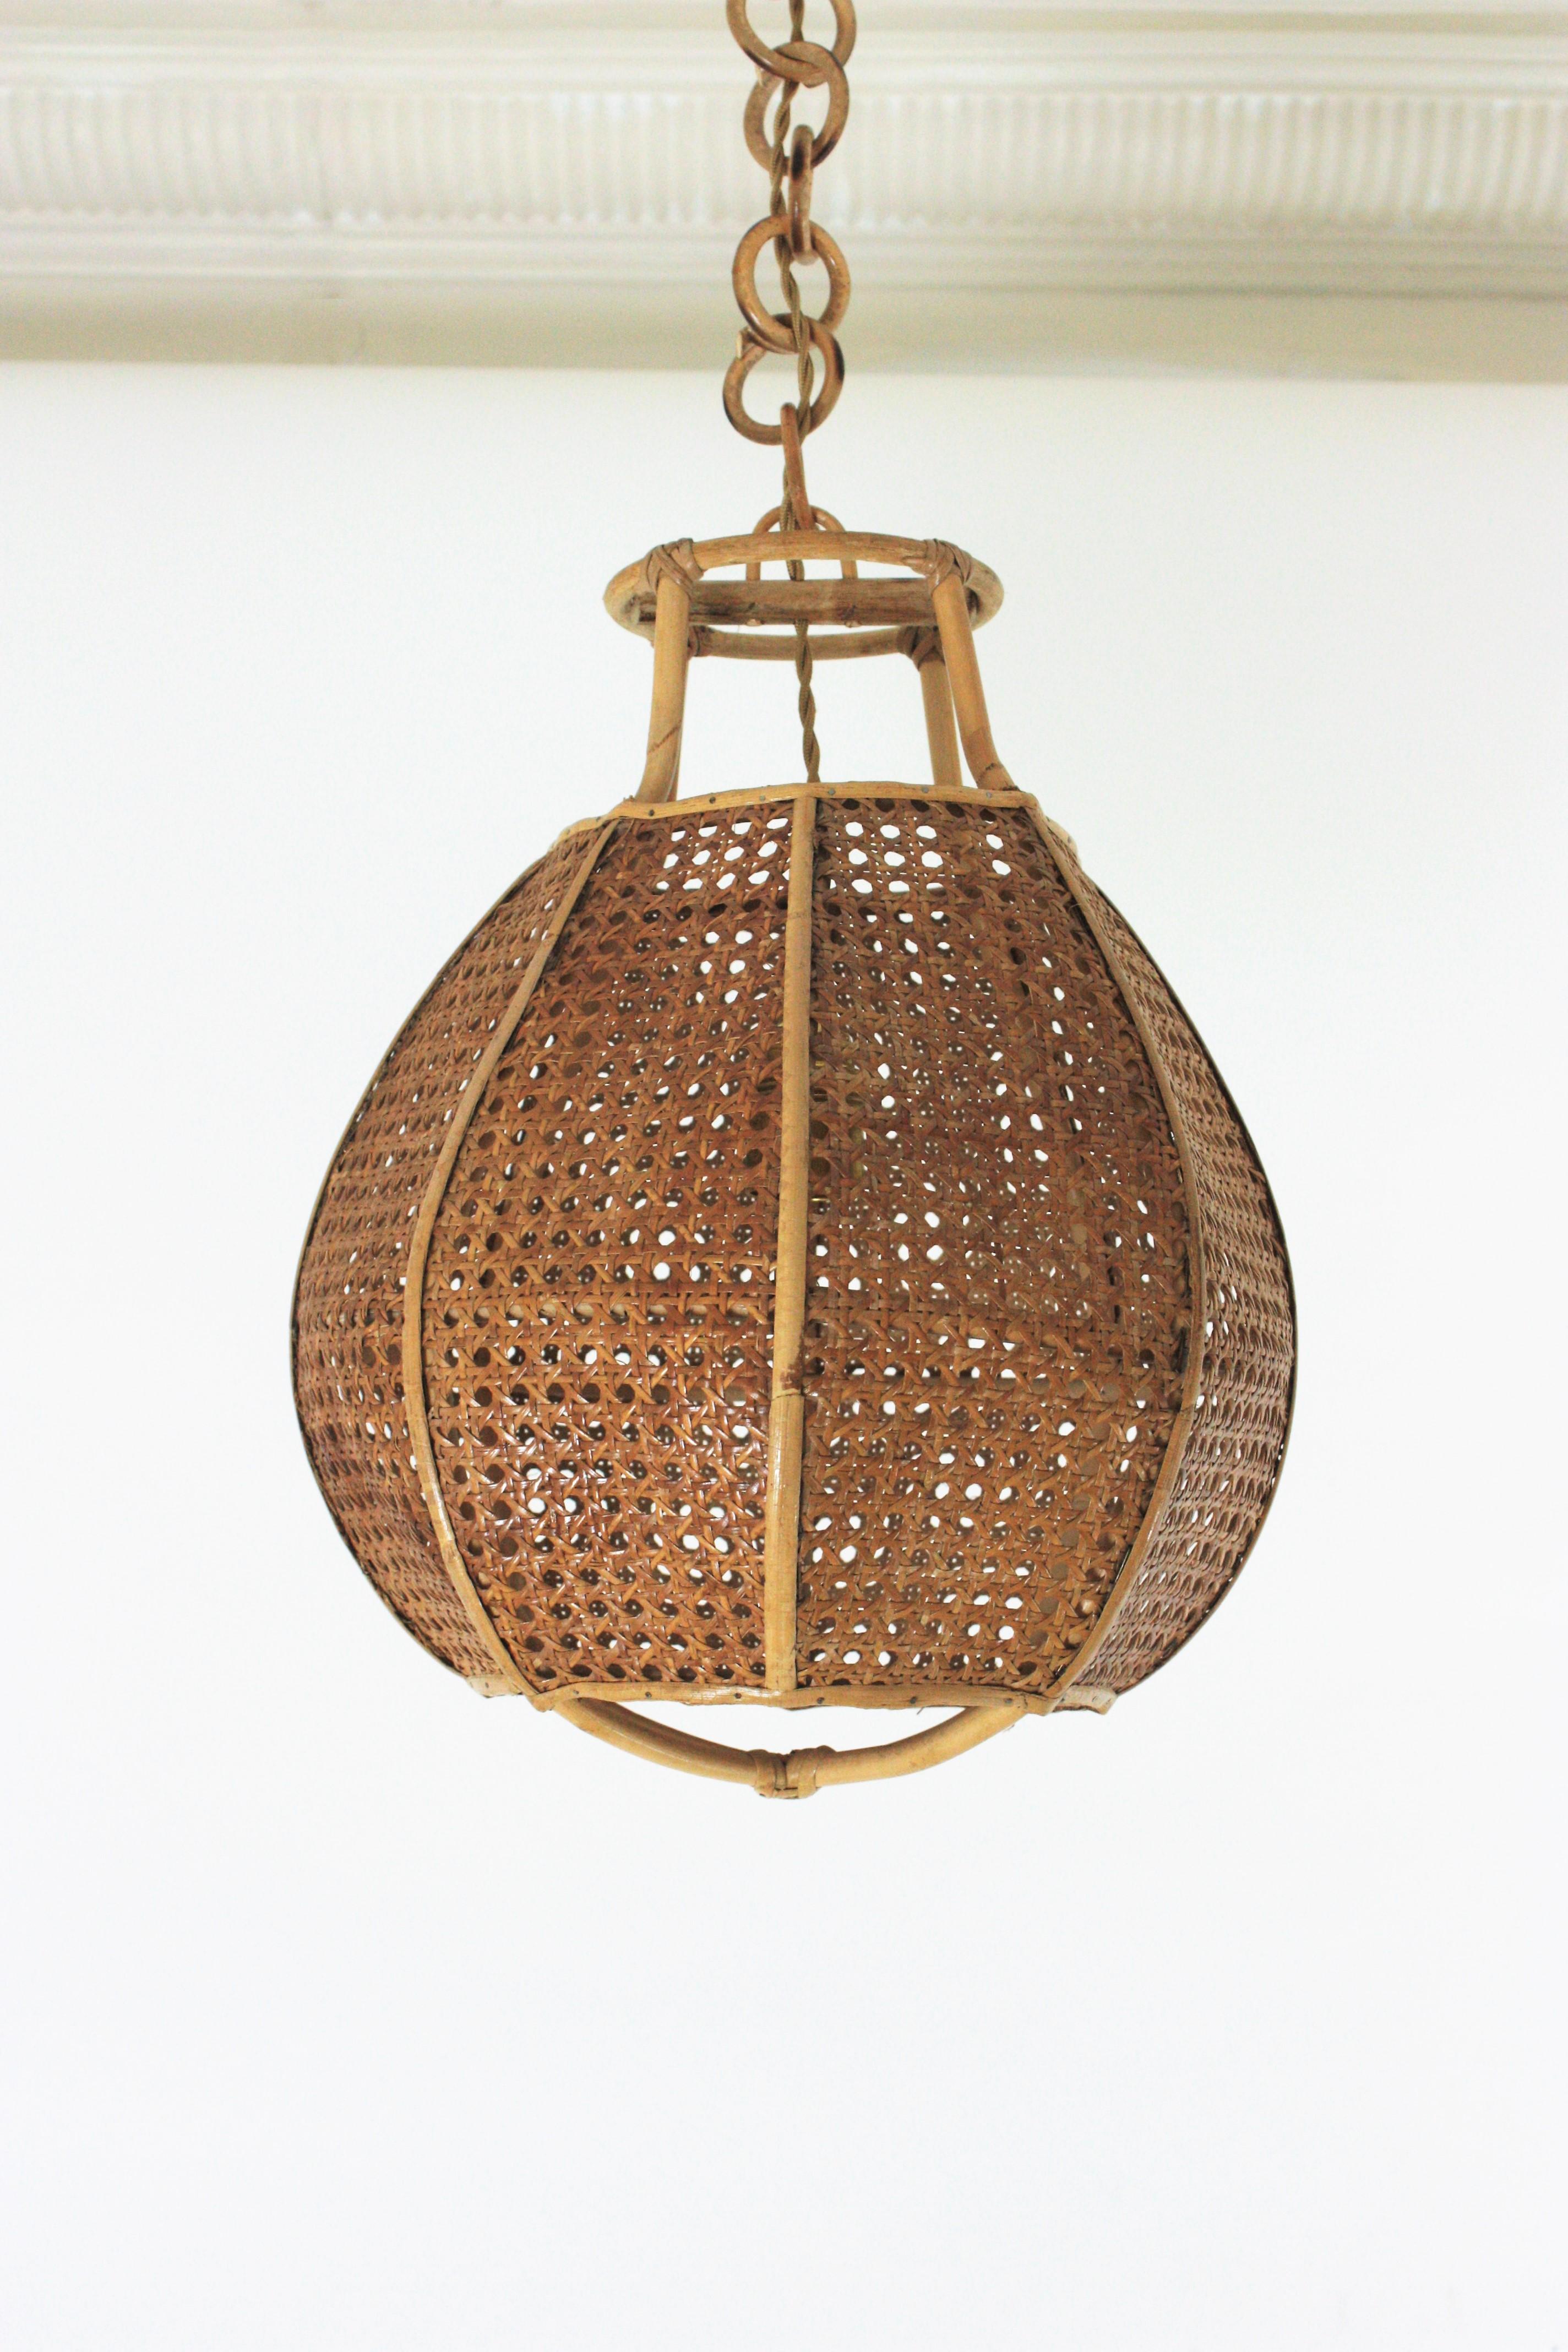 Italian Modernist Wicker Wire Rattan Globe Pendant Hanging Light In Good Condition For Sale In Barcelona, ES